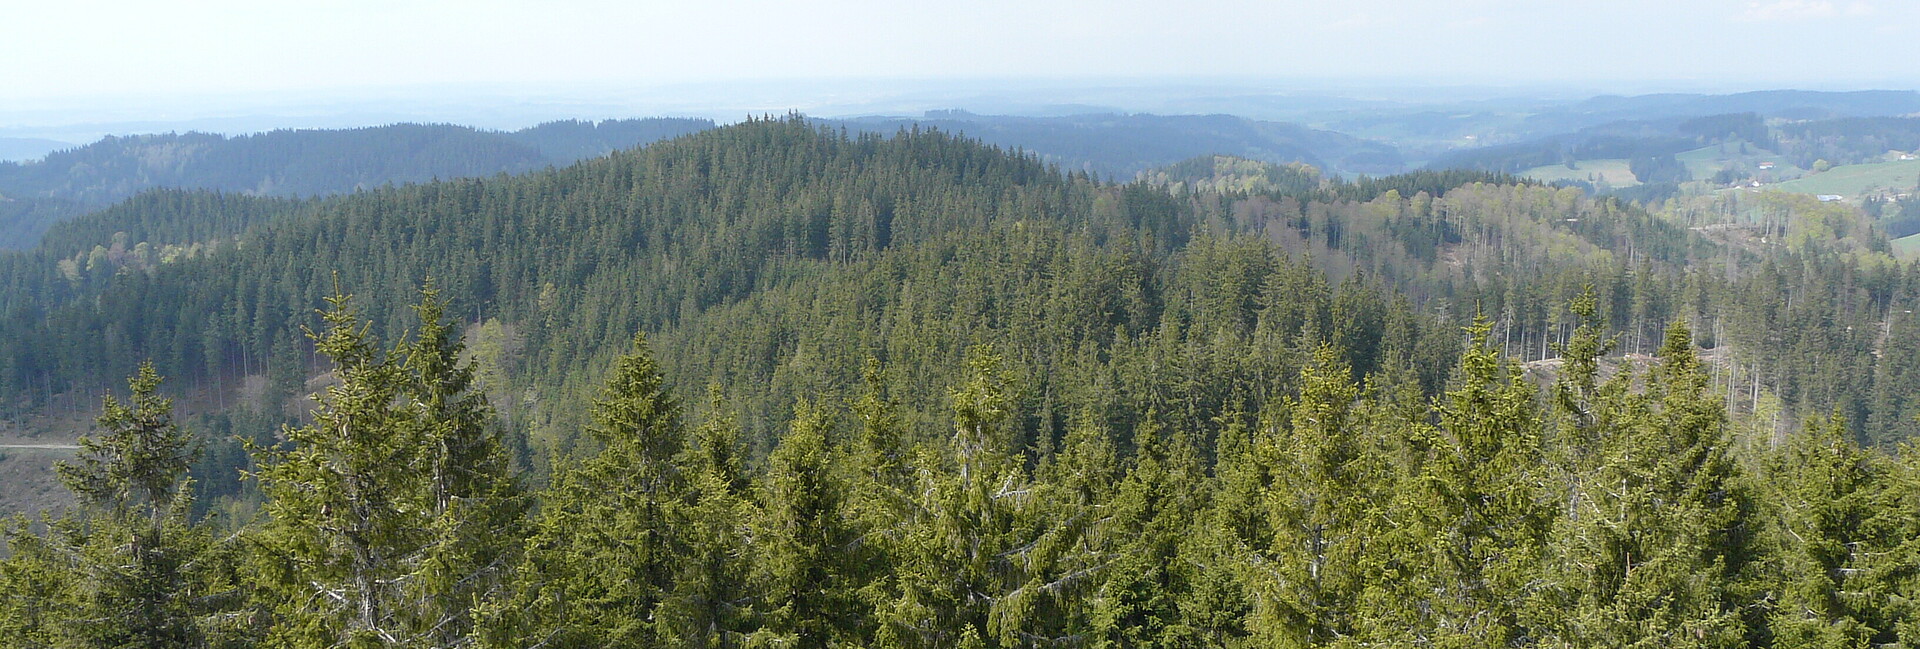 Blick auf die bewaldete Berglandschaft Adelegg